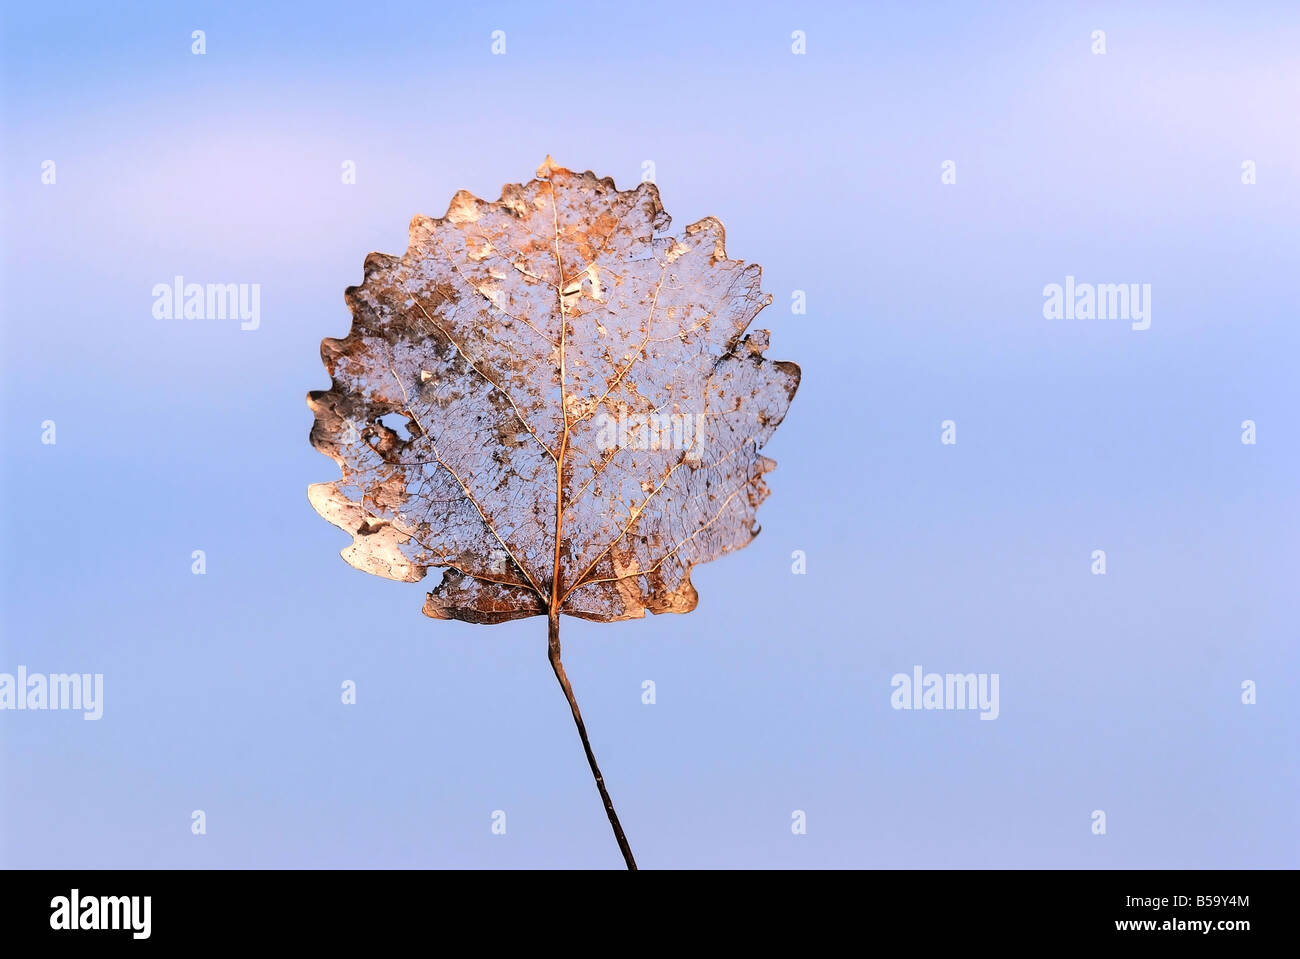 Dry autumn leaf on sky blue background Stock Photo